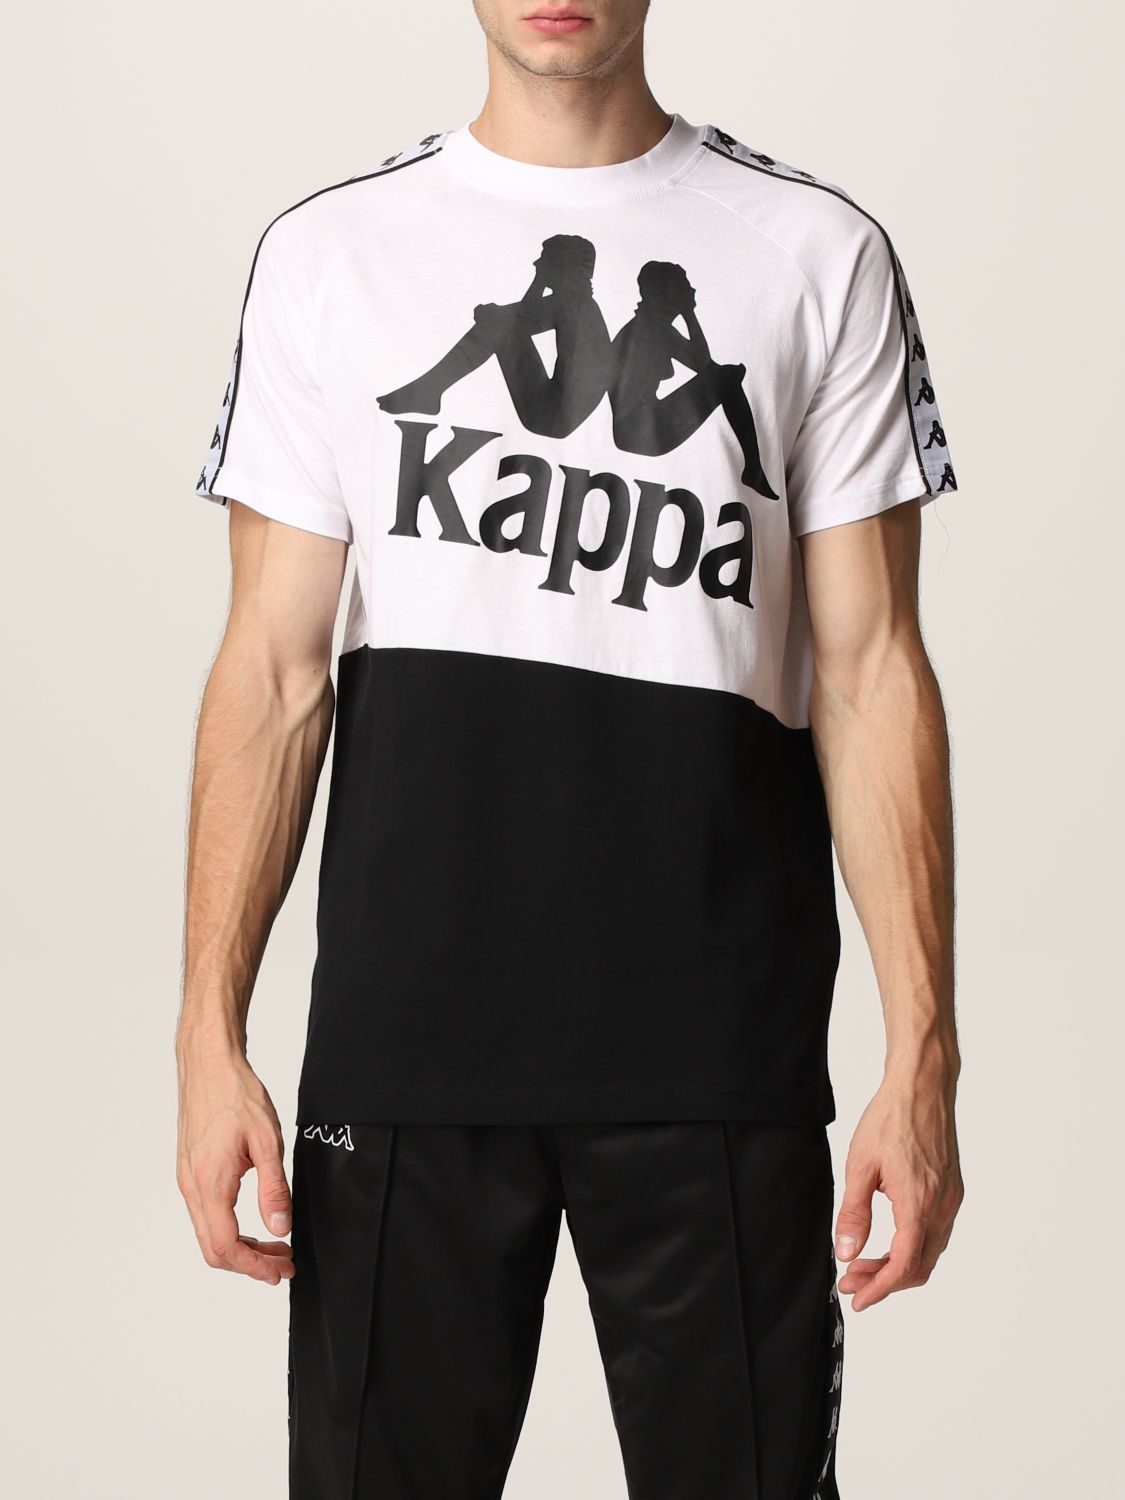 kappa shirt white